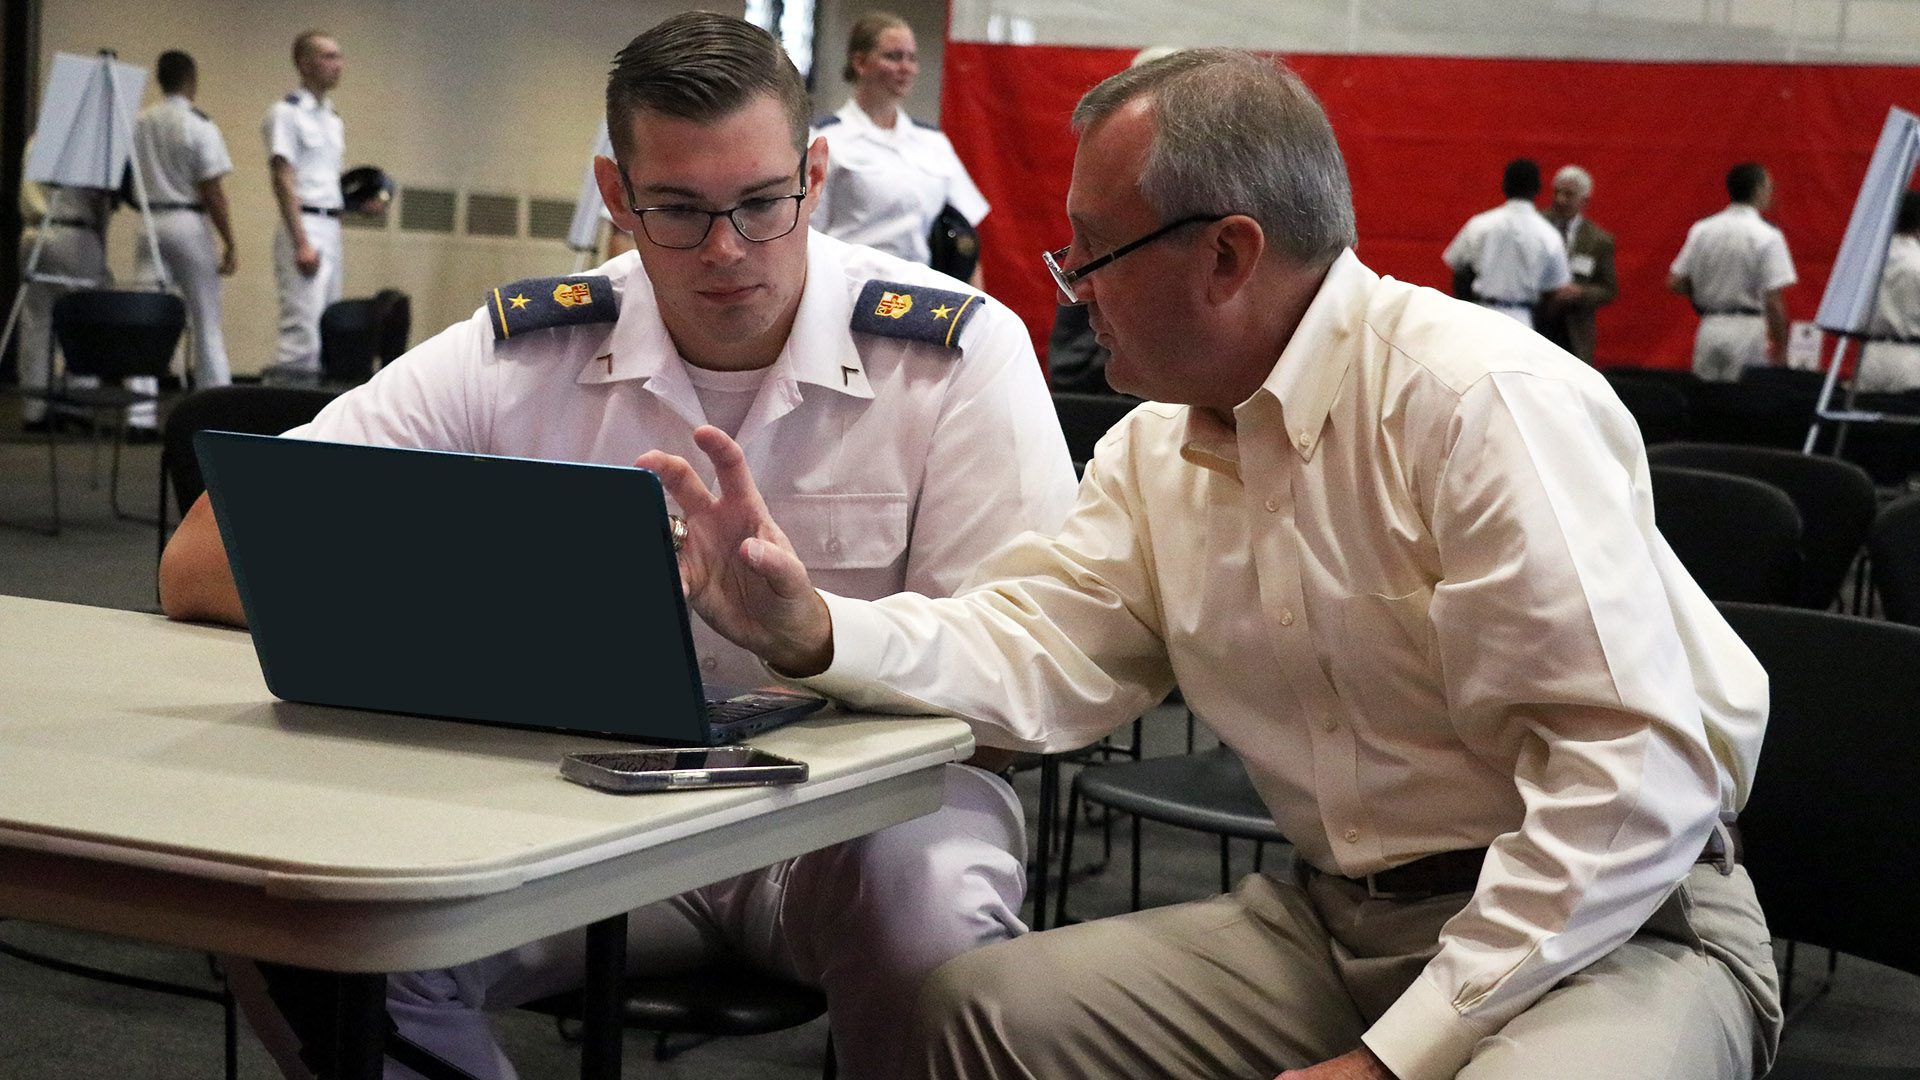 Alumnus talking with cadet at laptop